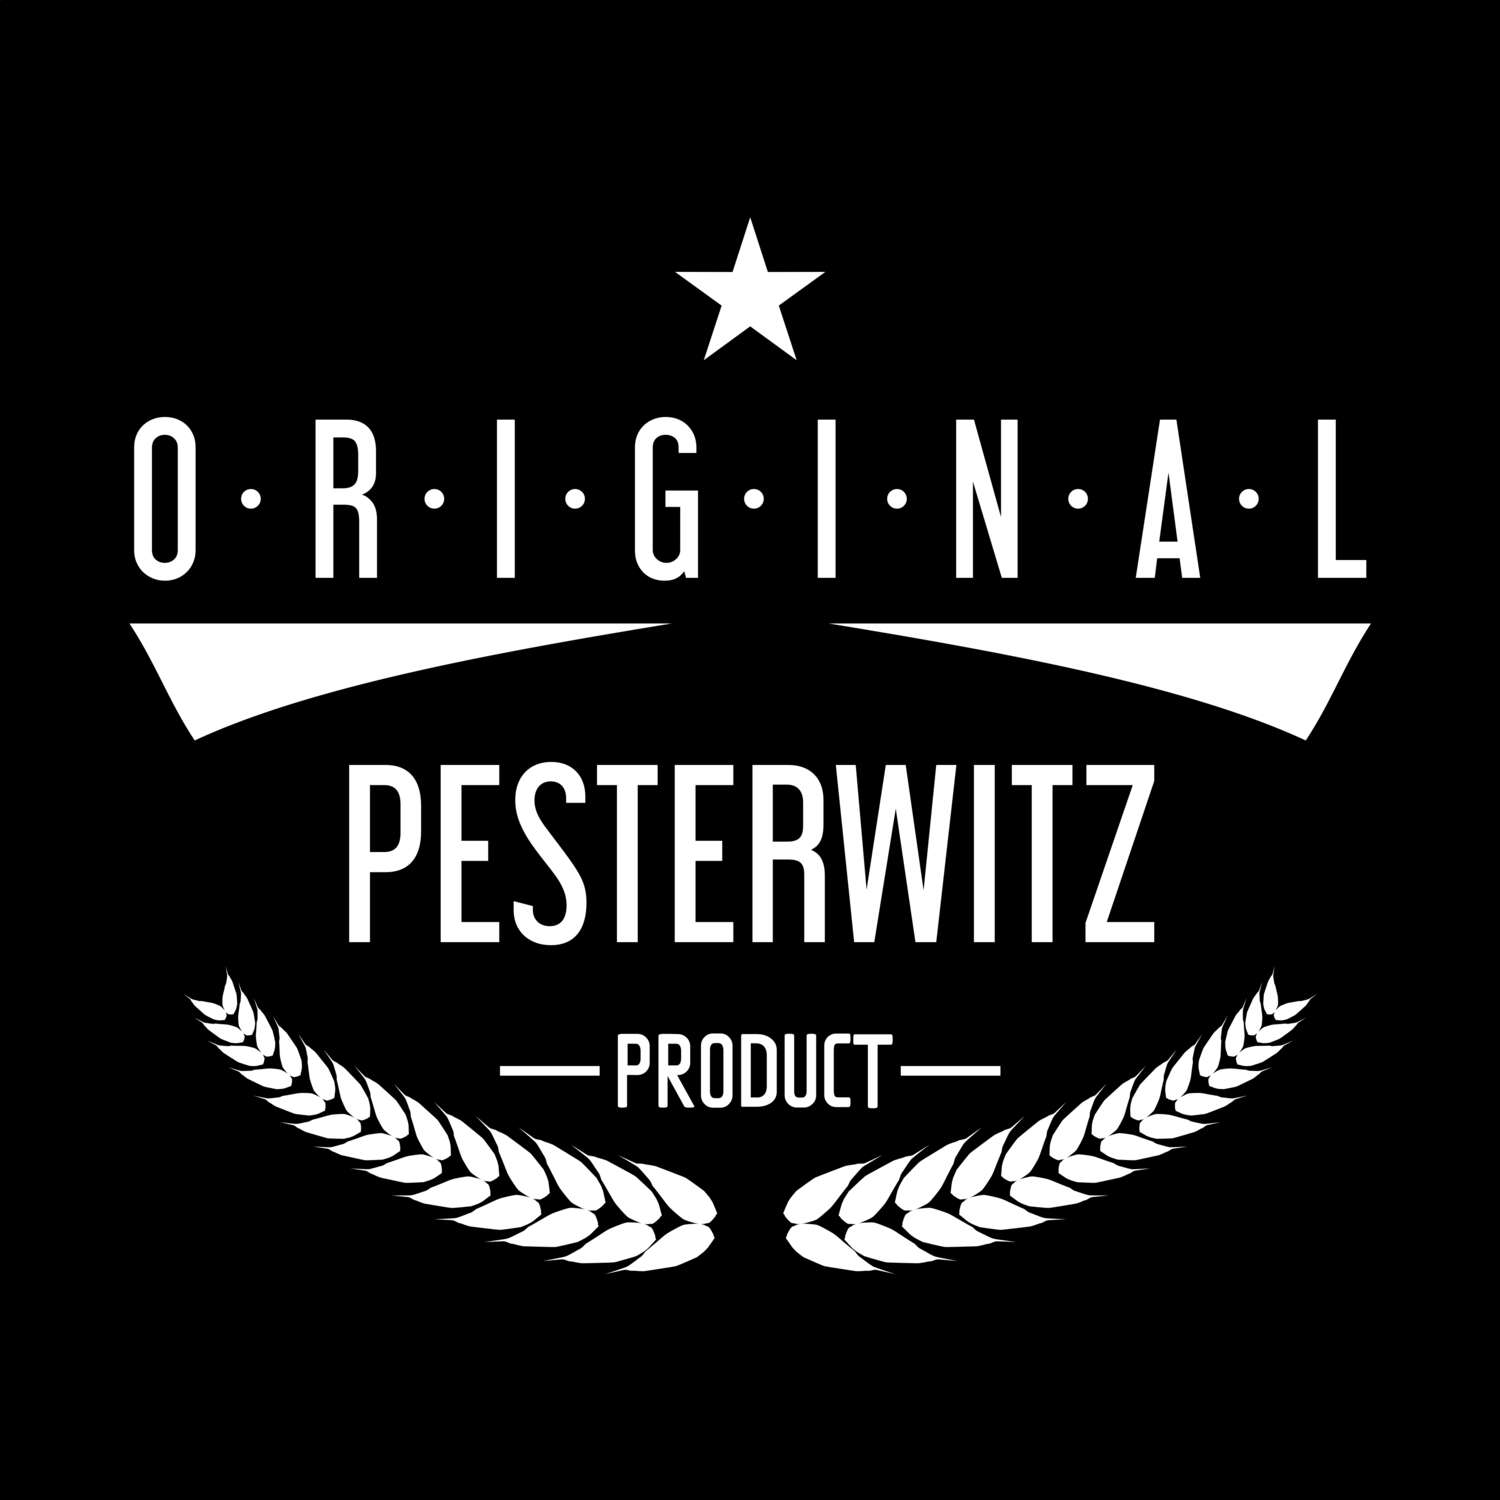 Pesterwitz T-Shirt »Original Product«